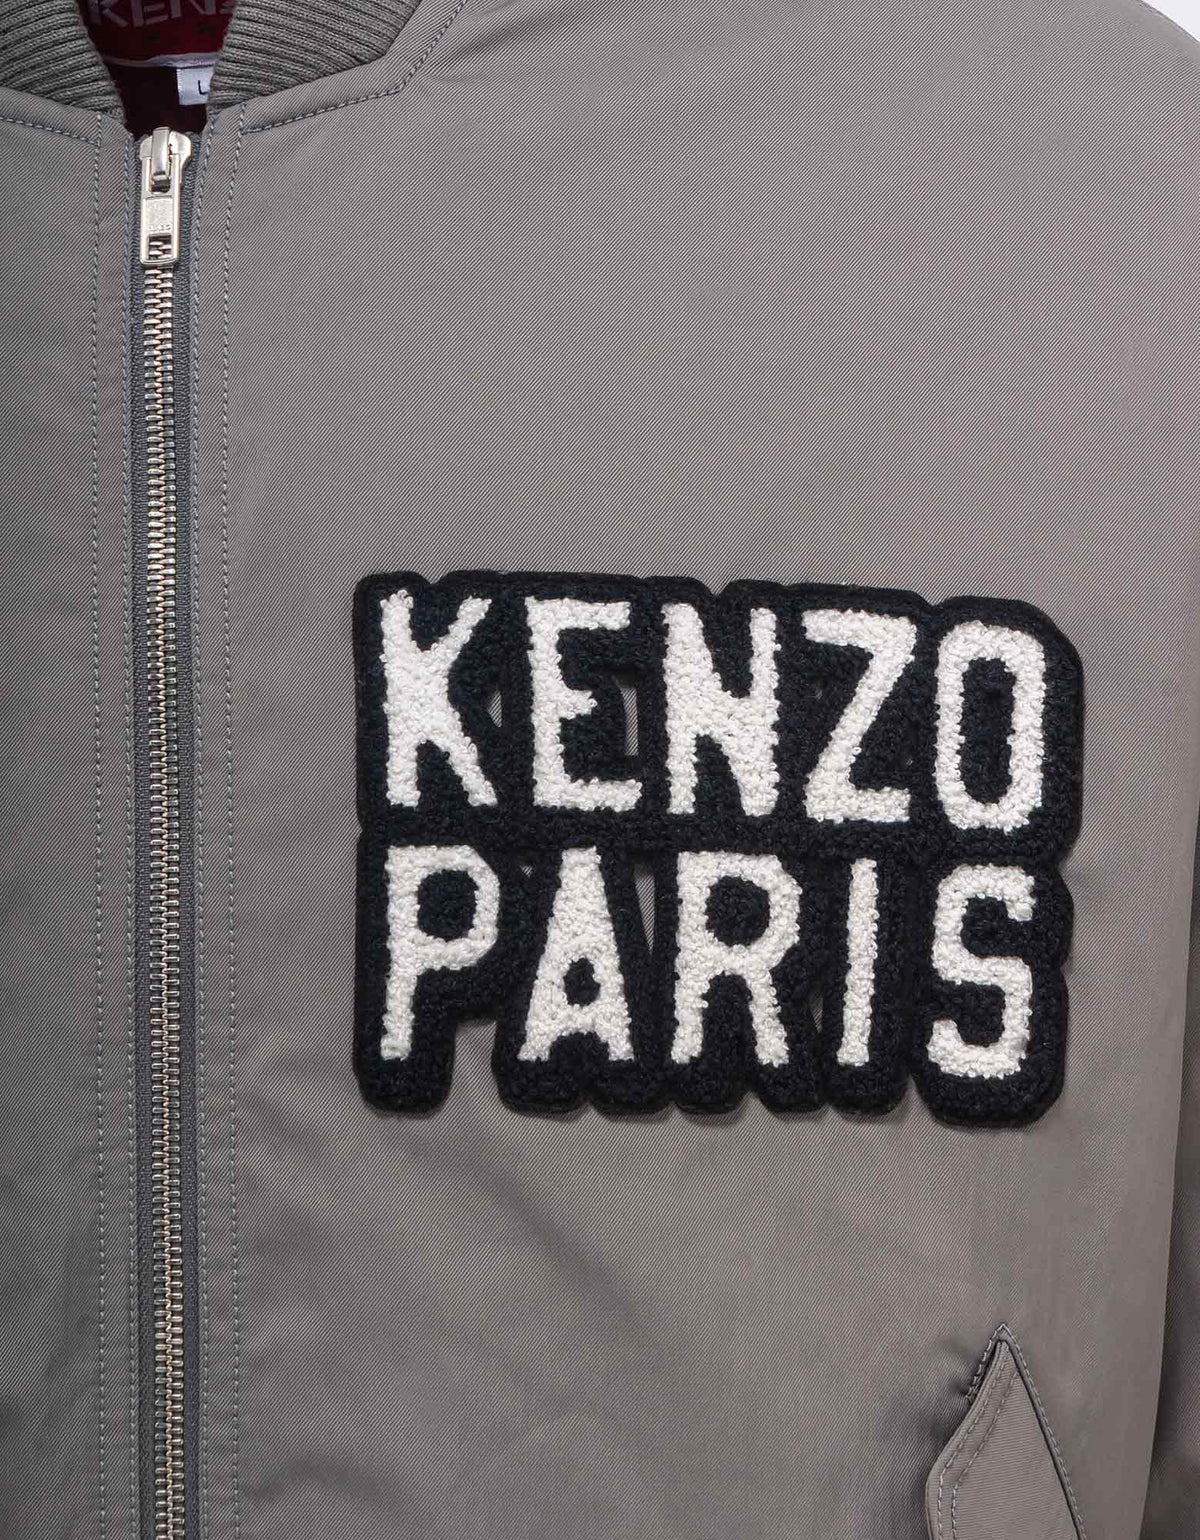 Kenzo Grey 'Kenzo Elephant' Bomber Jacket